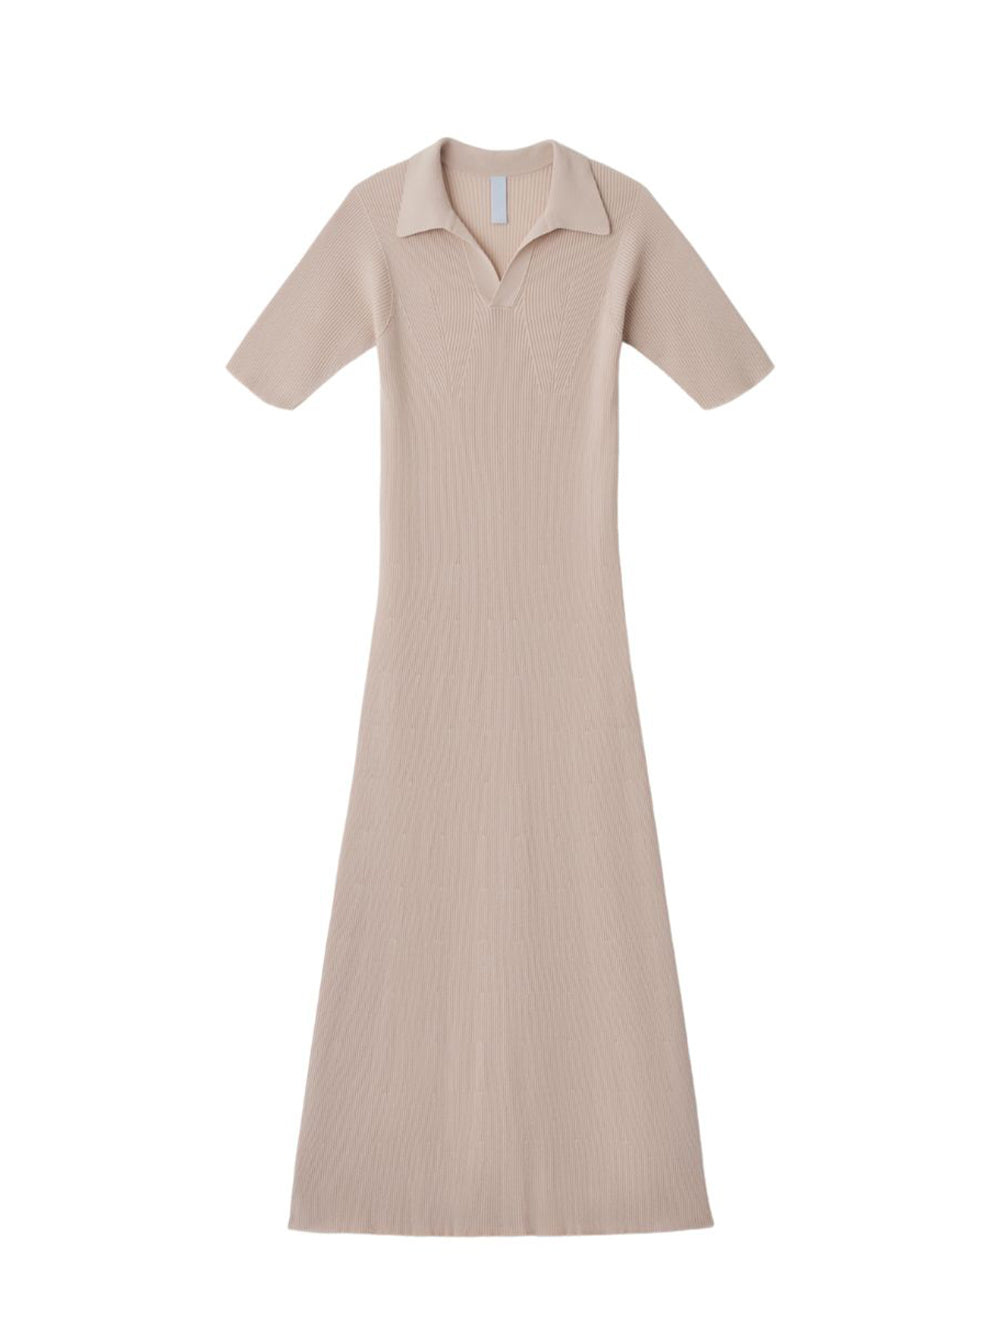 Bs Rib Short Sleeve Polo Dress (Light Beige)